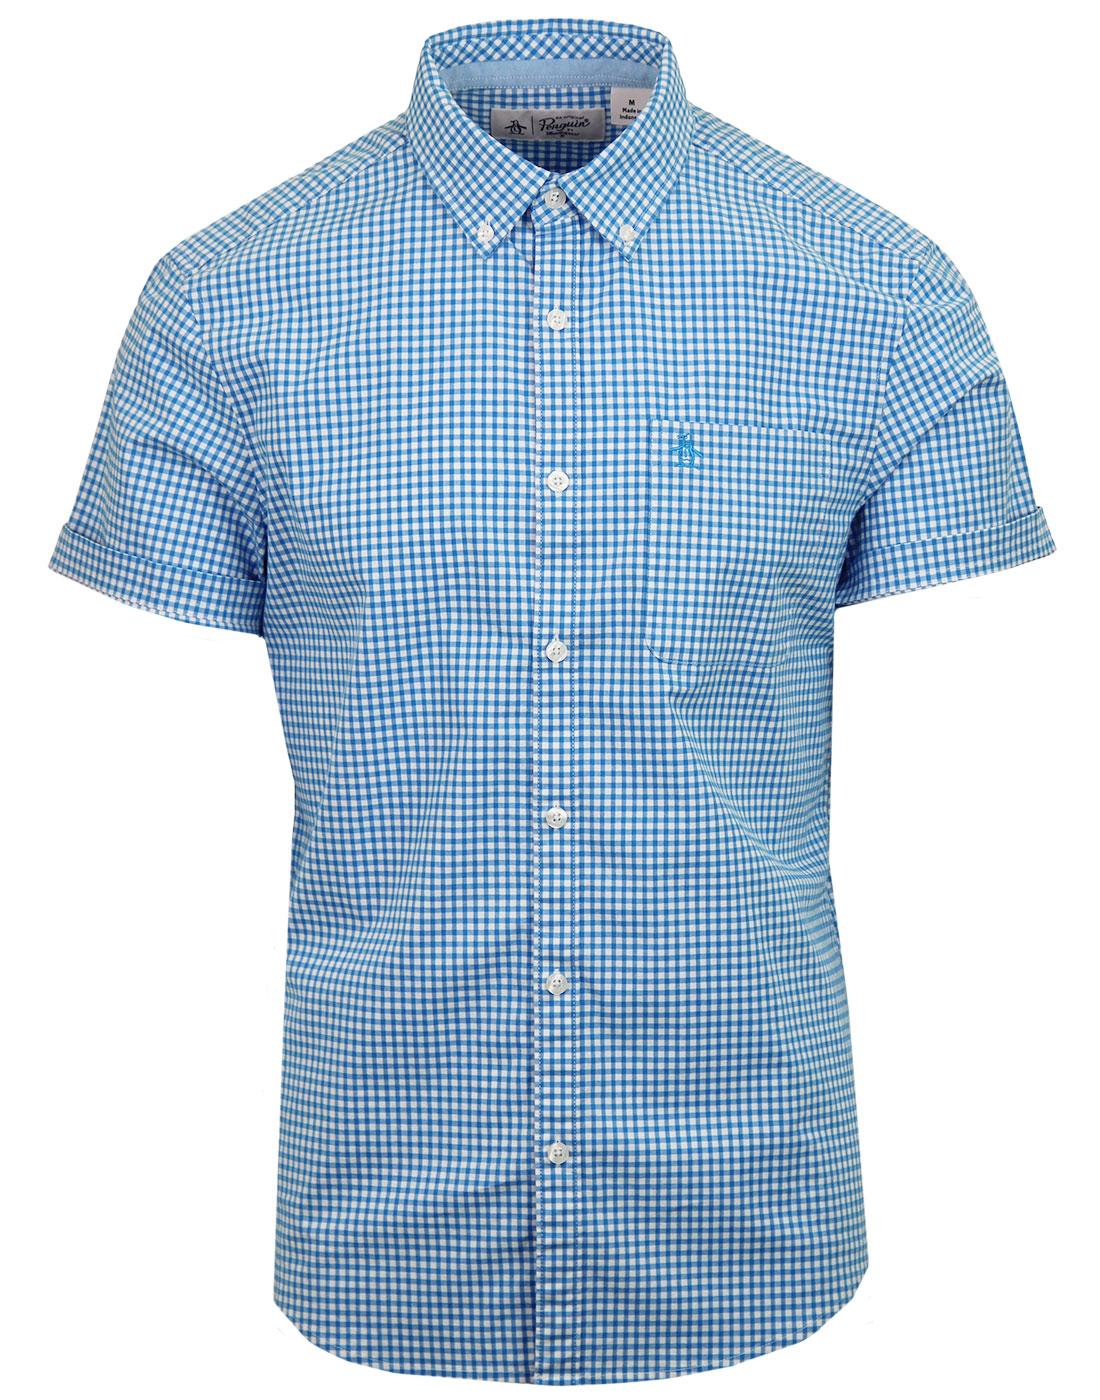 ORIGINAL PENGUIN Short Sleeve Gingham Shirt BLUE